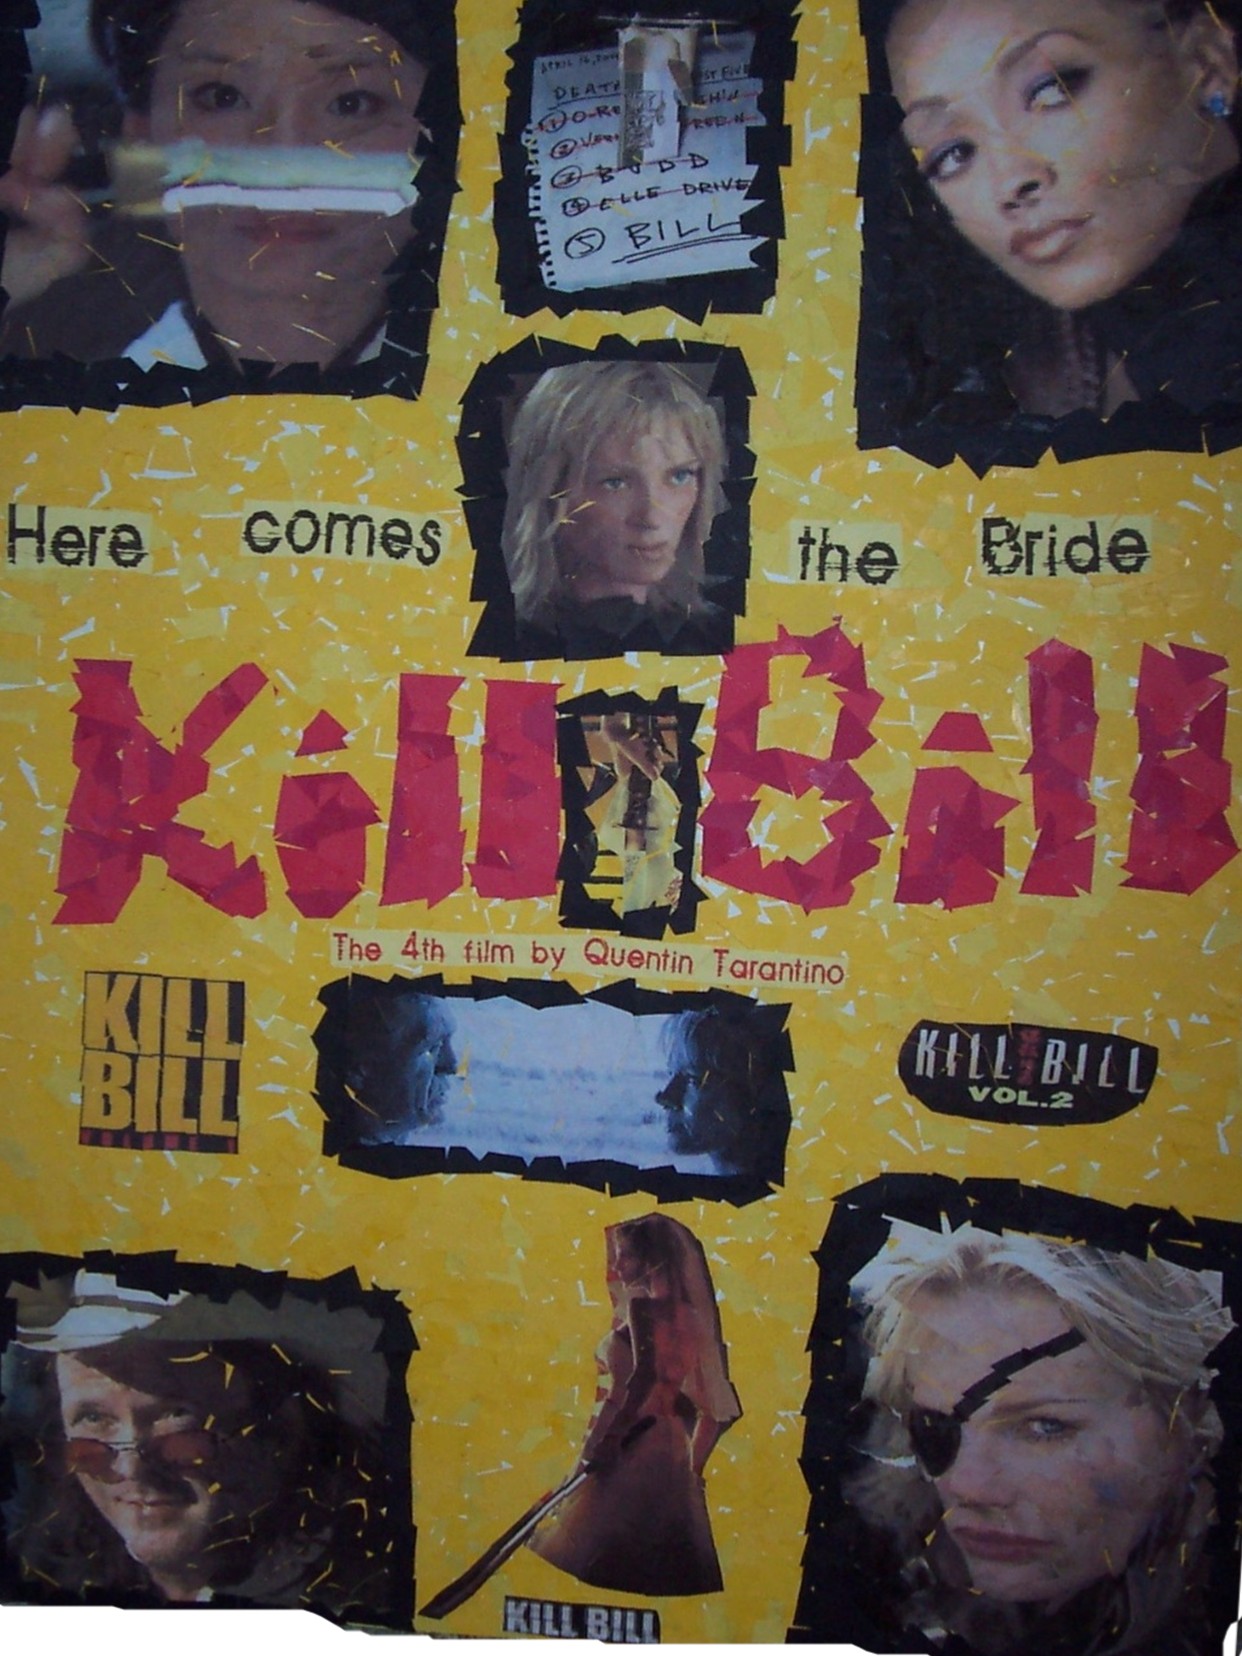 Kill Bill collage